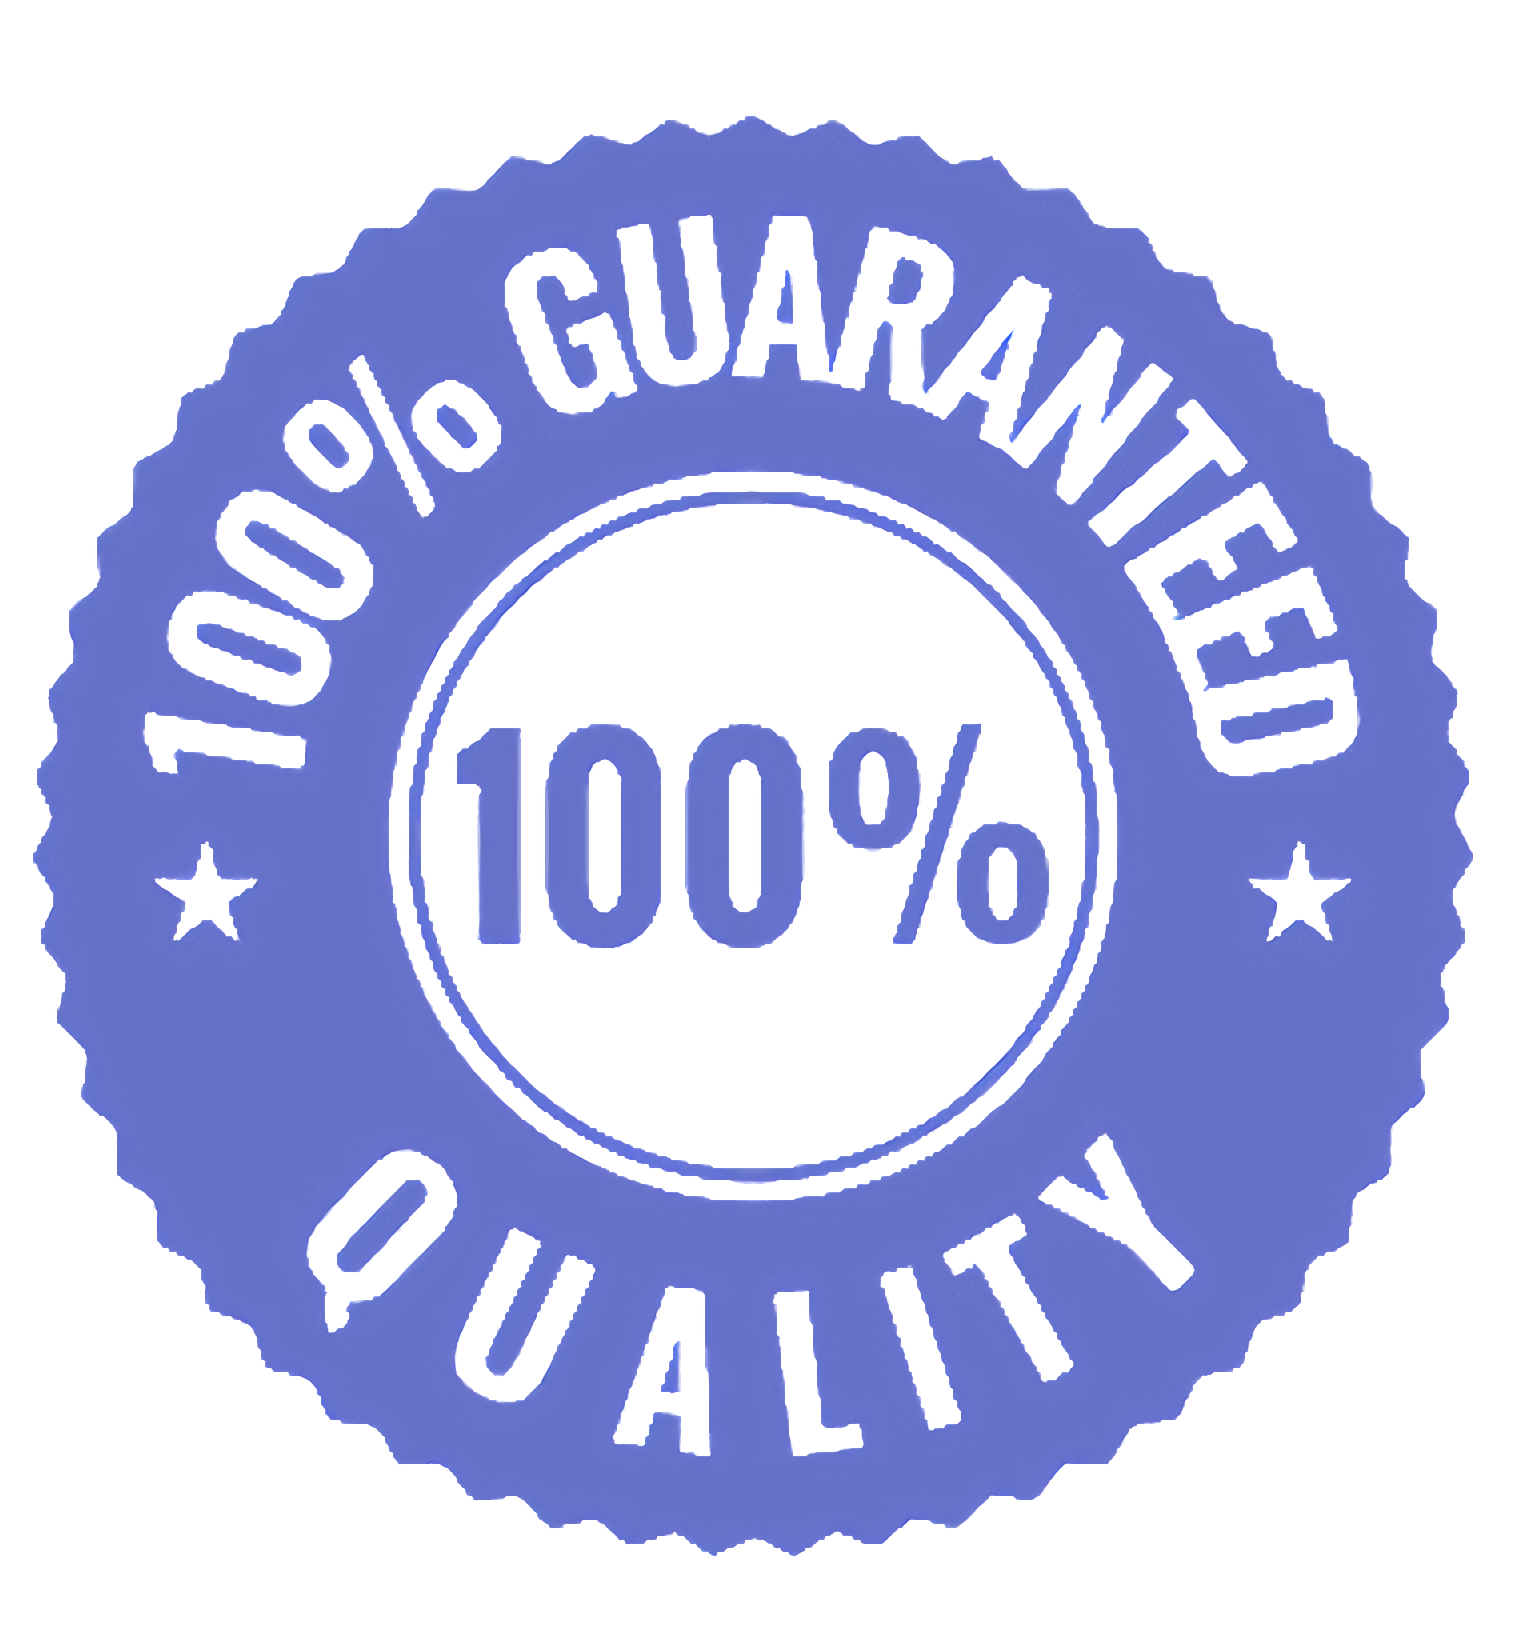 100% quality guaranteed icon